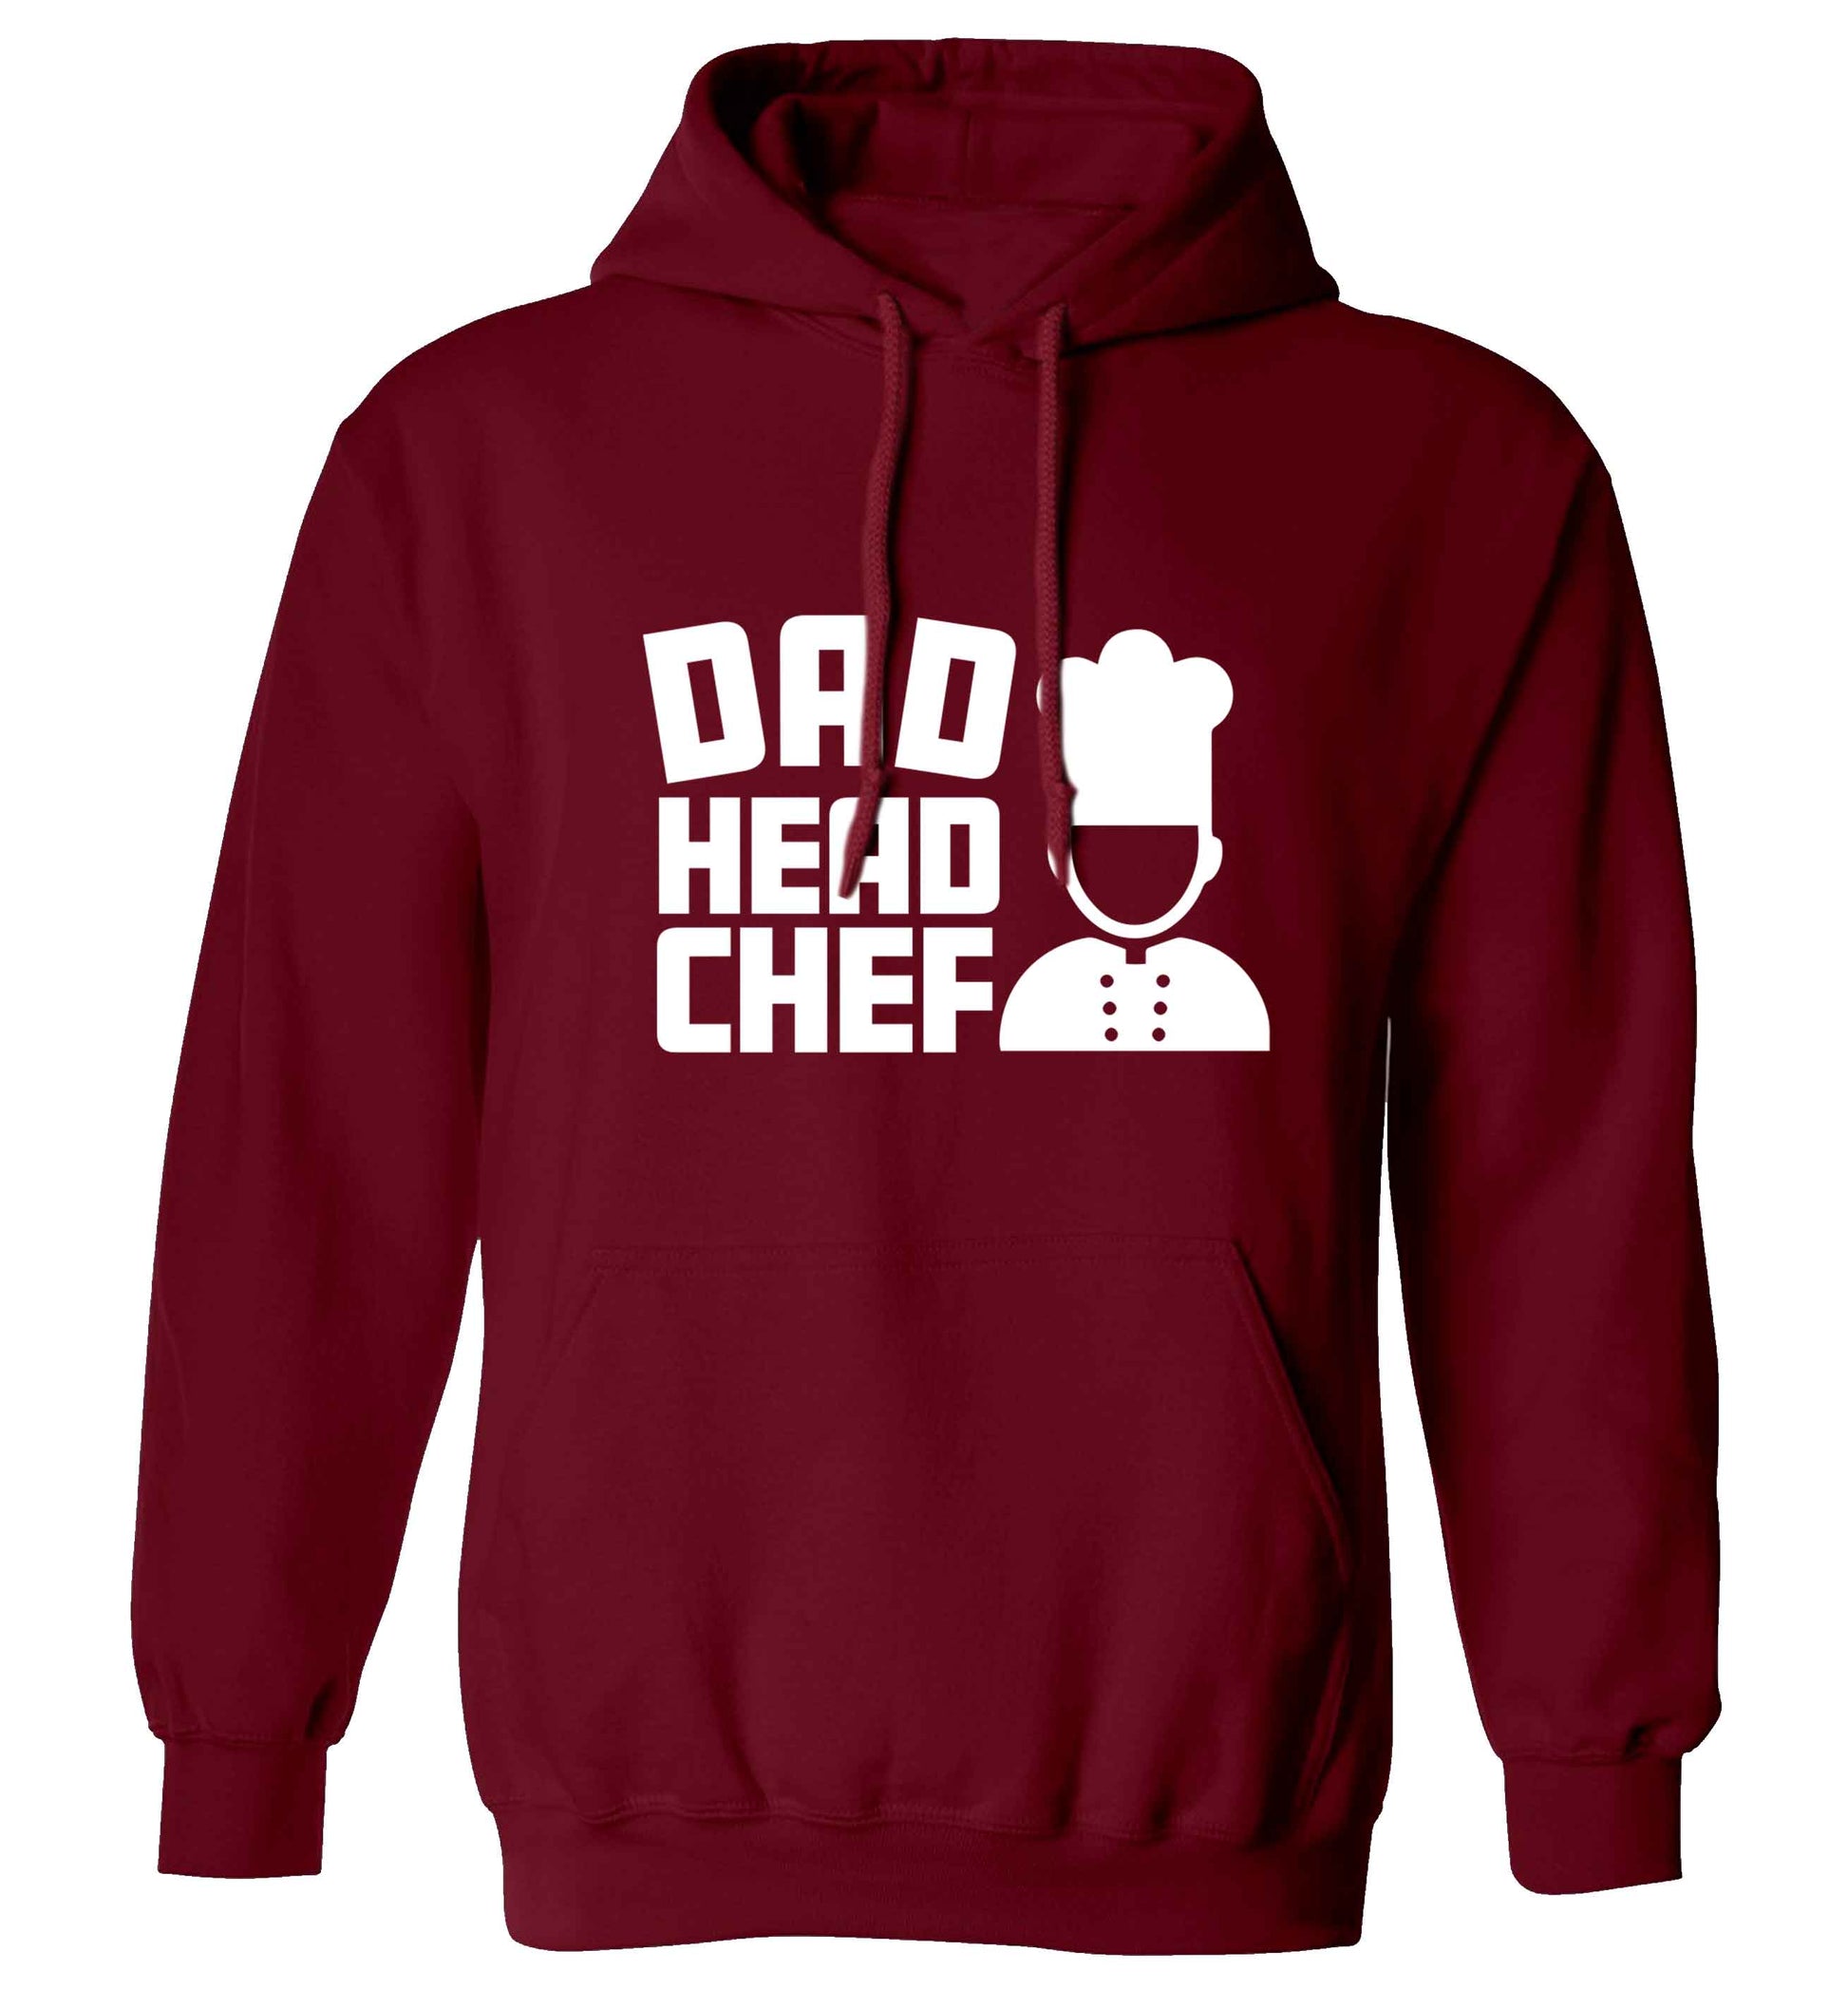 Dad head chef adults unisex maroon hoodie 2XL